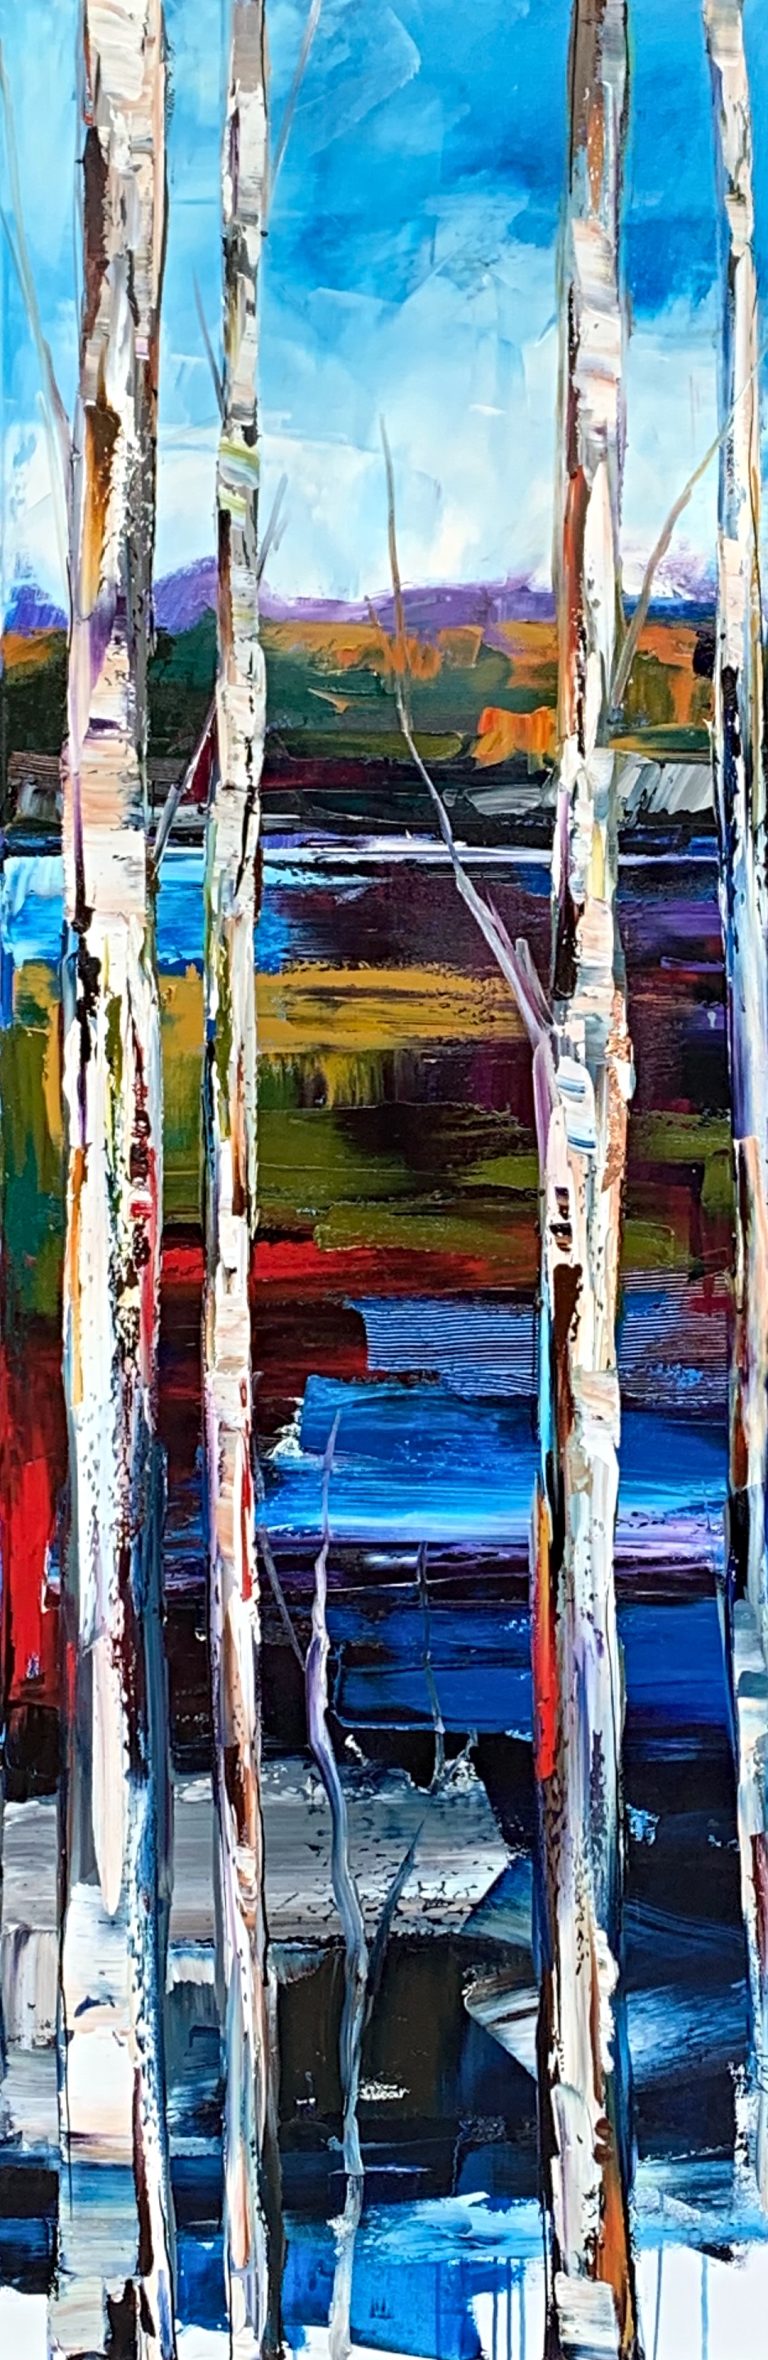 Follow My Tracks 4, mixed media landscape painting by Kimberly Kiel | Effusion Art Gallery + Cast Glass Studio, Invermere BC